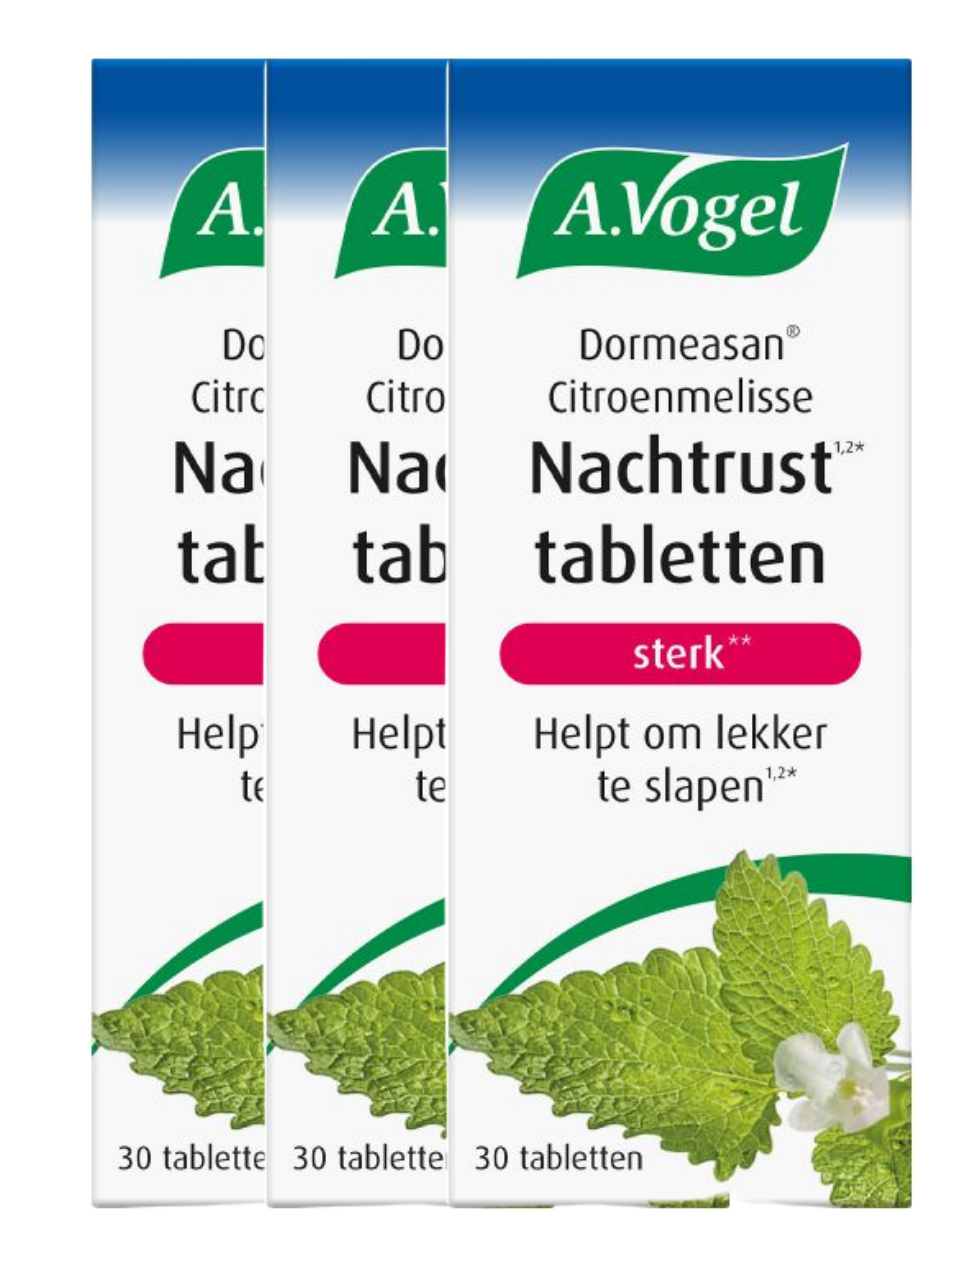 A.Vogel Dormeasan Citroenmelisse sterk** Tabletten Multiverpakking